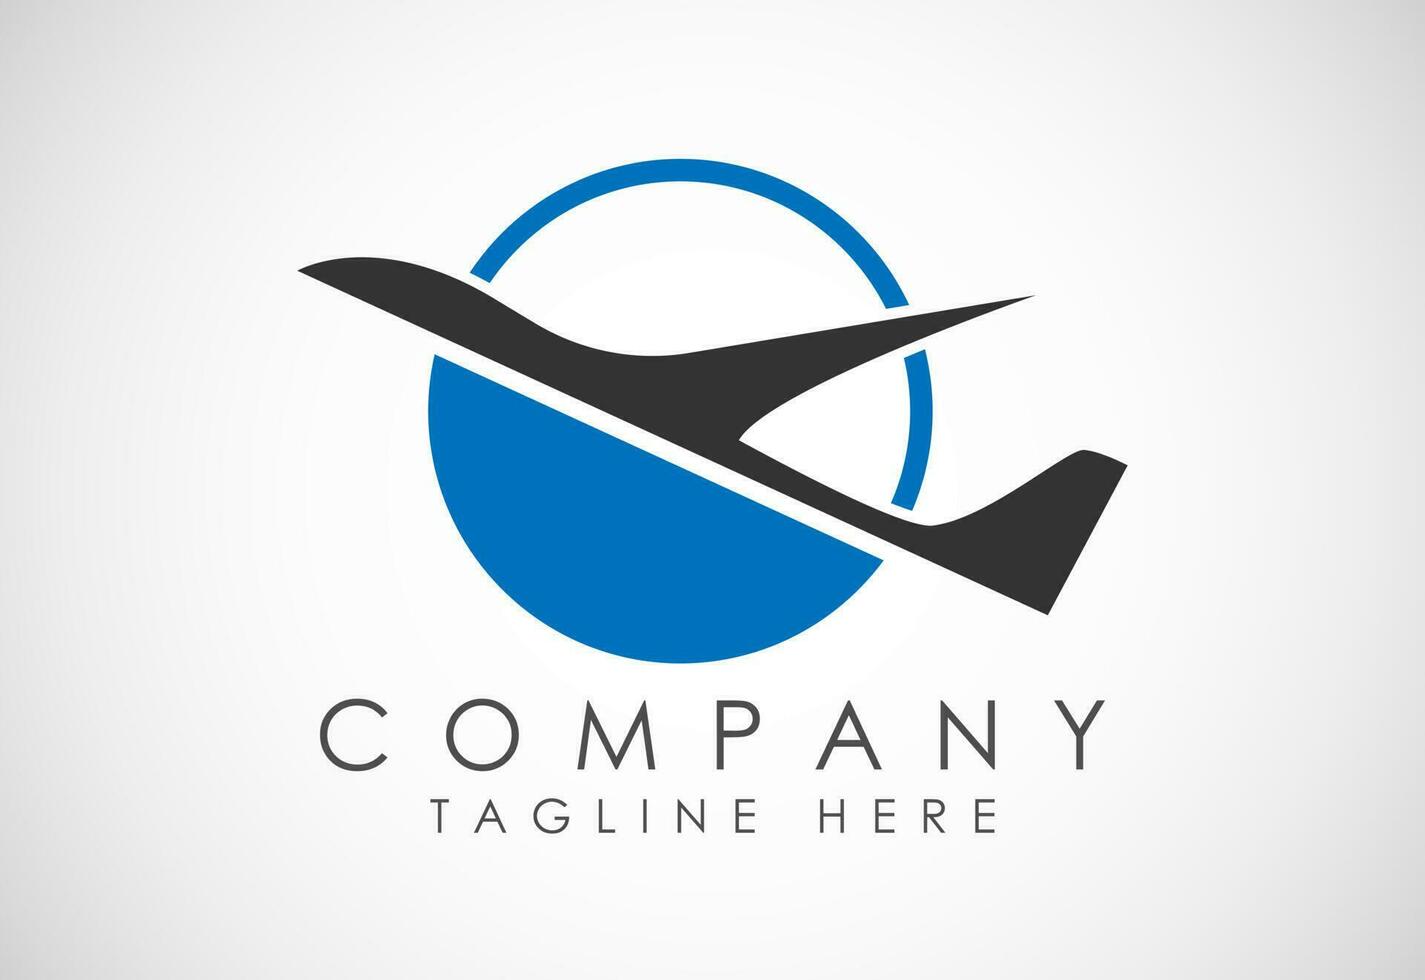 Airplane aviation vector logo design concept. Airline logo plane travel icon. Airport flight world aviation.